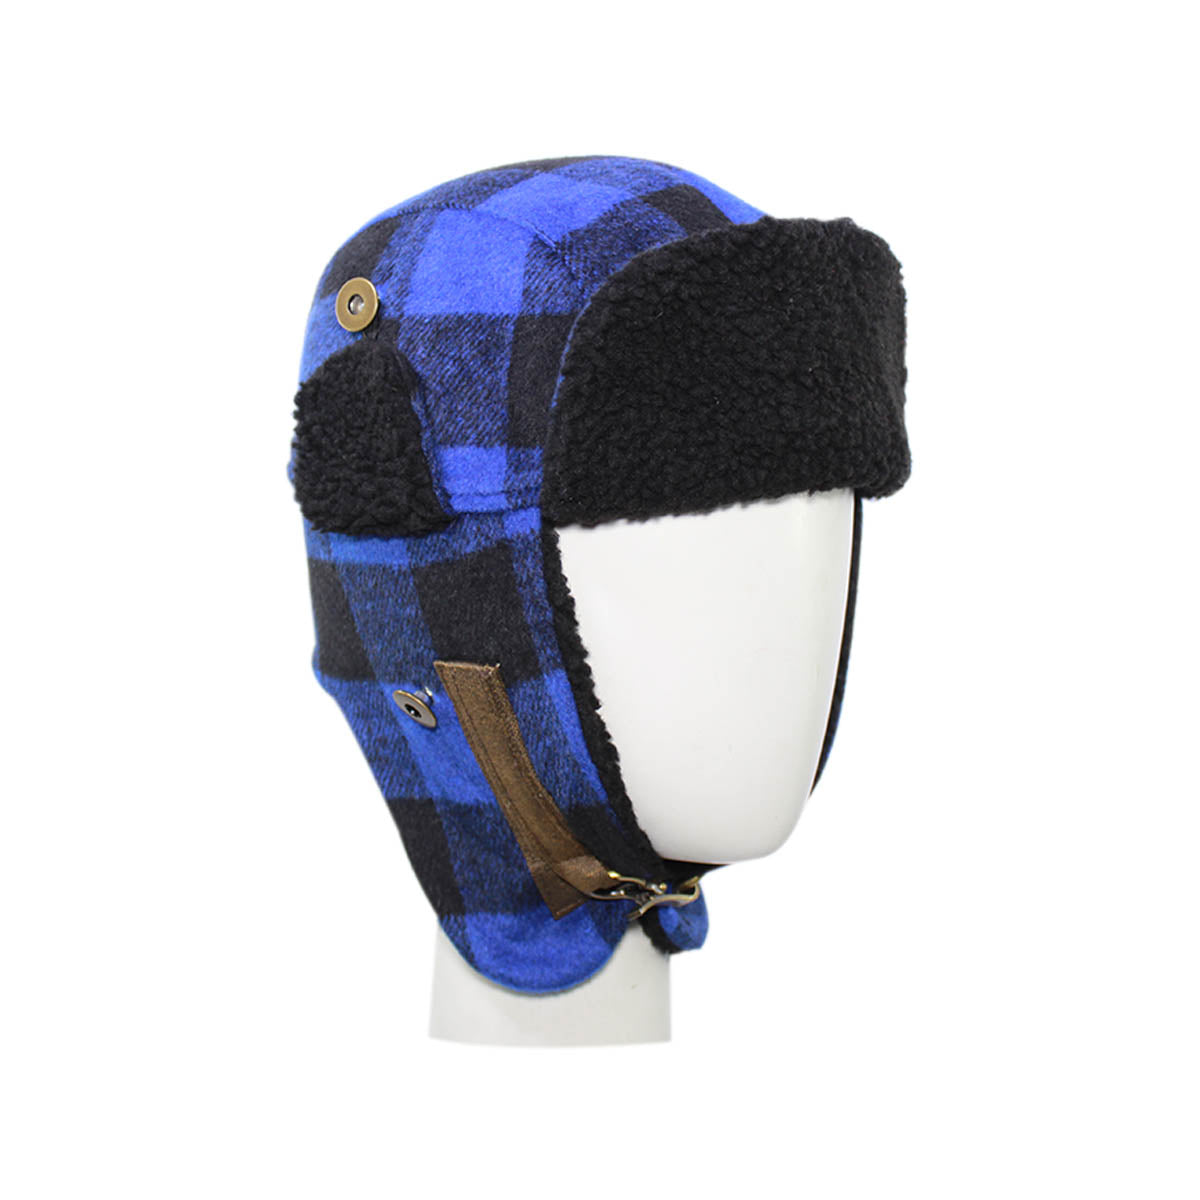 Trapper Hat warm light weight soft polar fleeces lining 1162